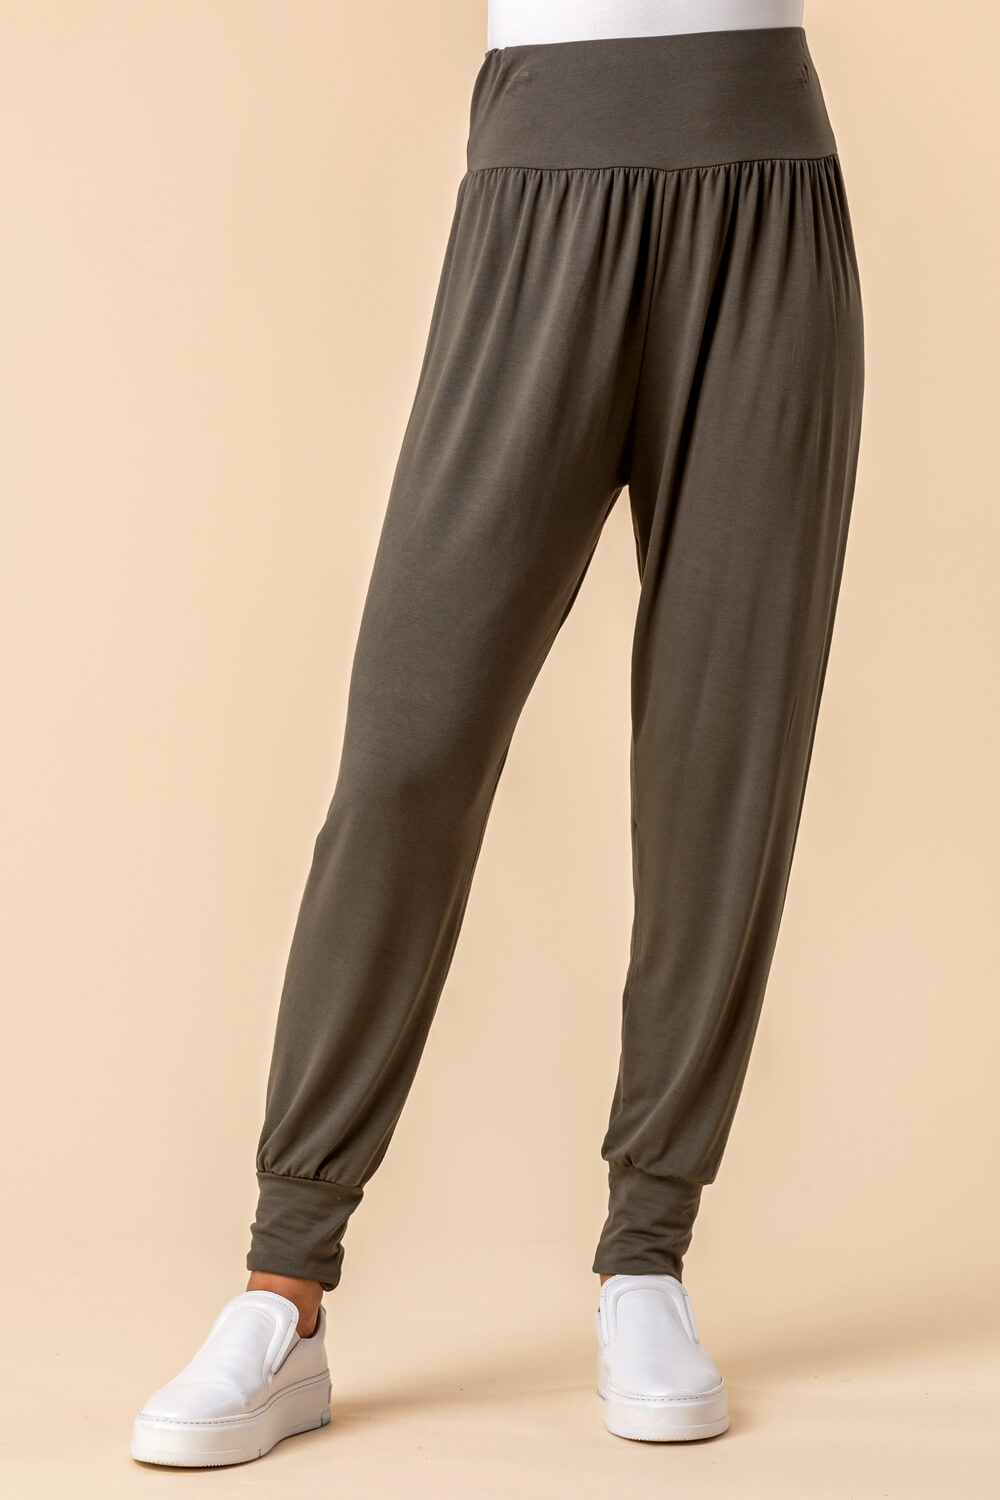 Elastic Waist Oversized Linen Woven Fabric Harem Pants  Khaki Size 2XL